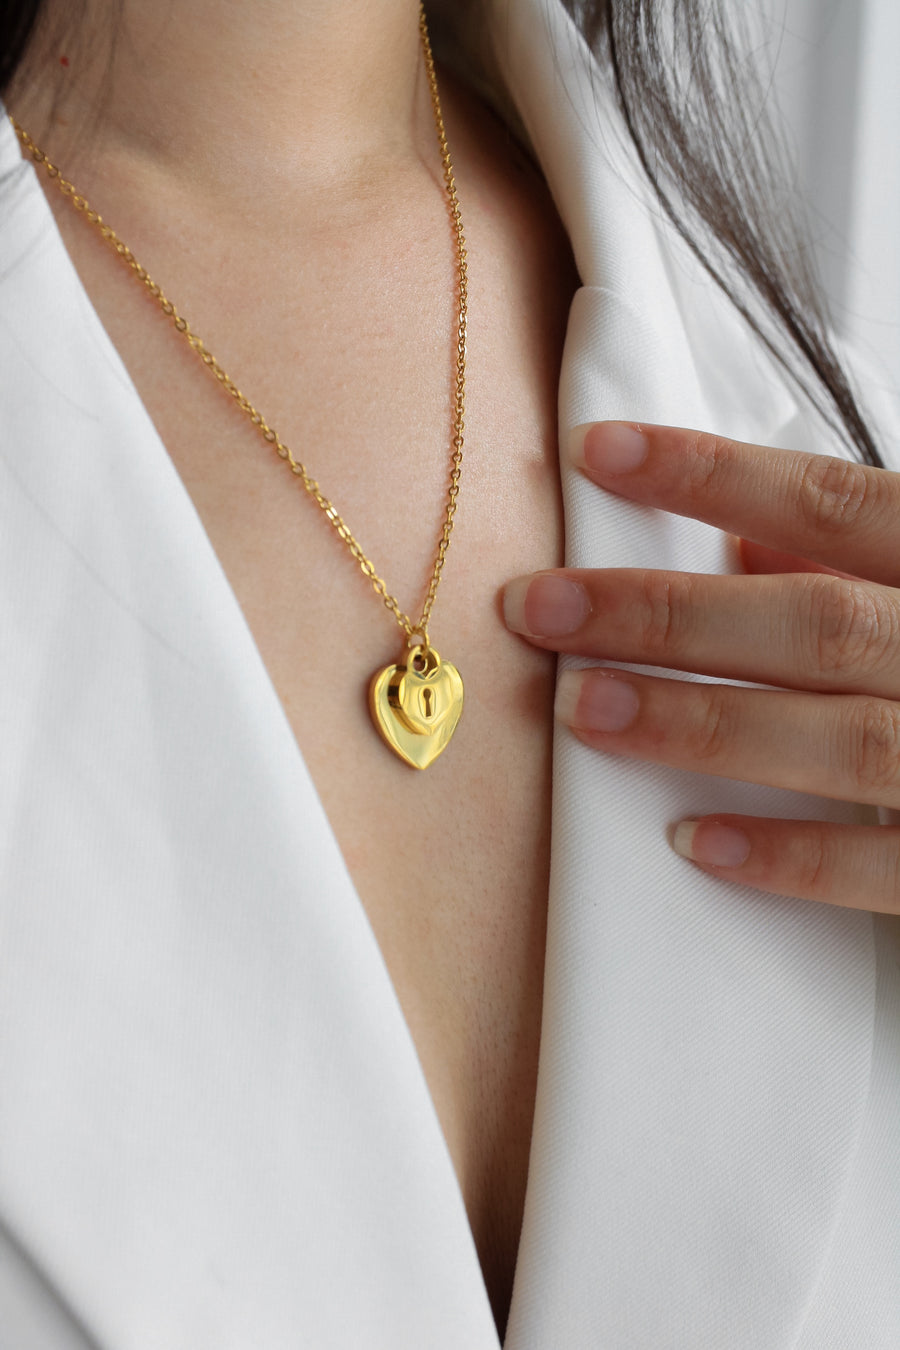 Love Lock Engravable Necklace (Gold)